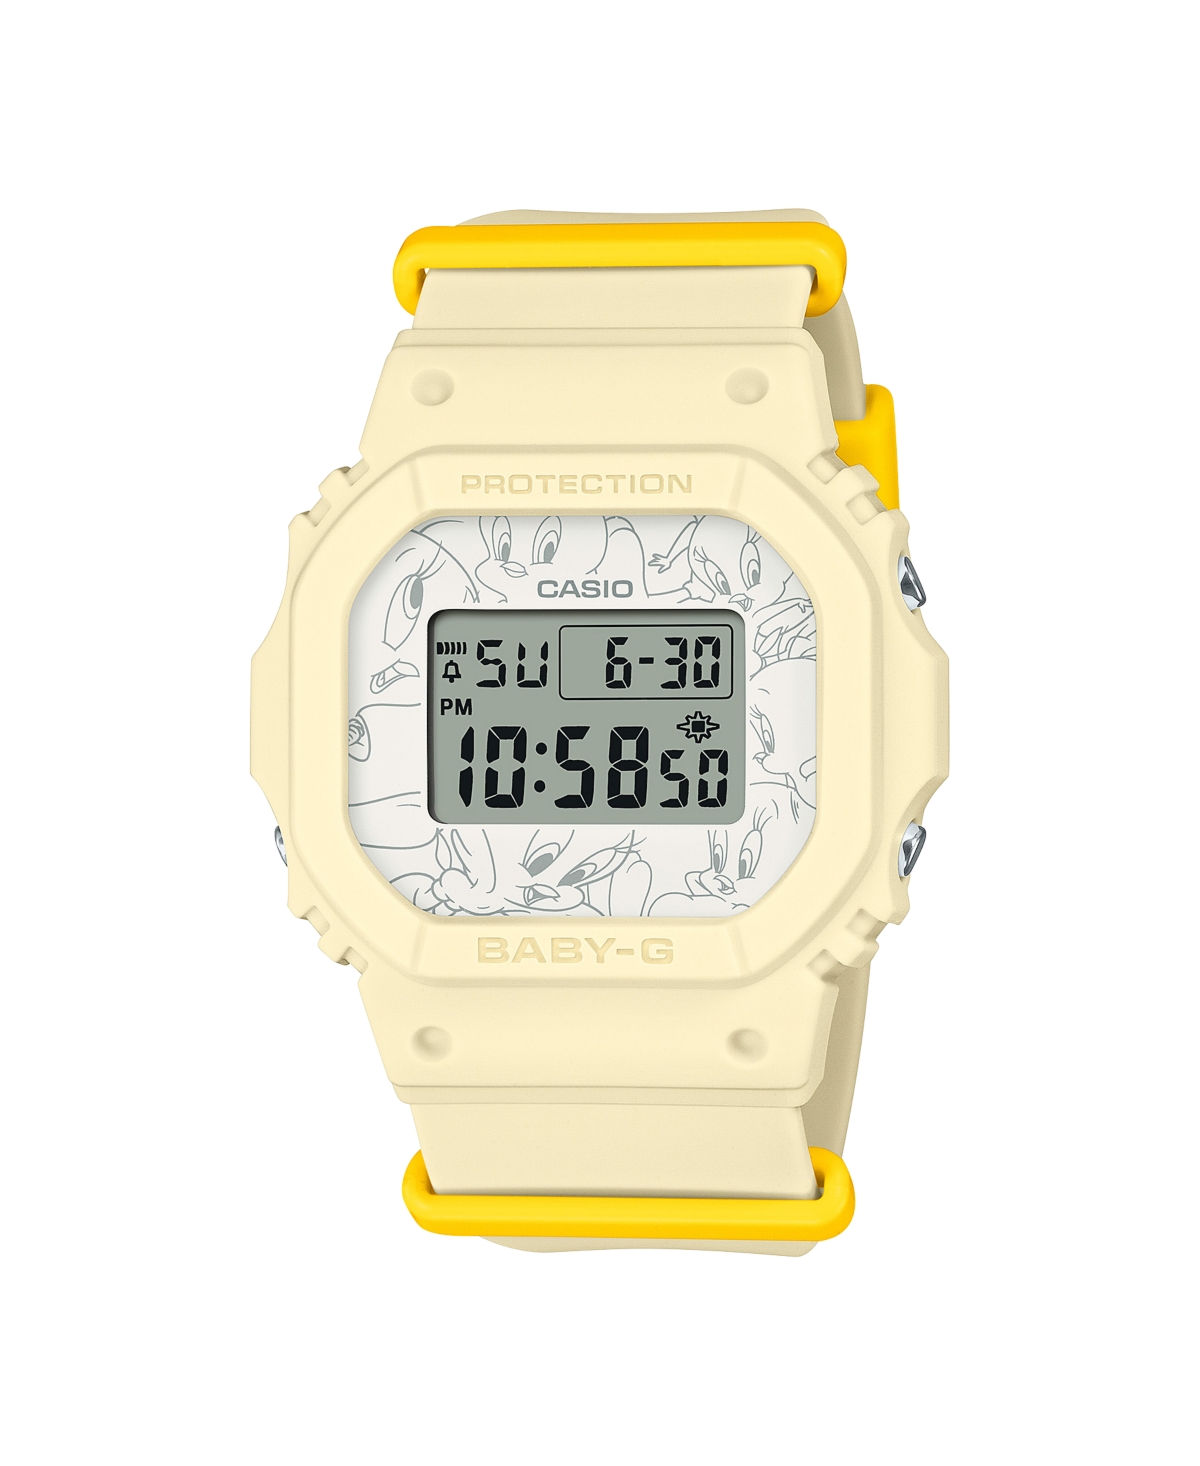 G-shock Women's Baby-g Digital Yellow Resin Watch 37.9mm, Bgd565tw-5